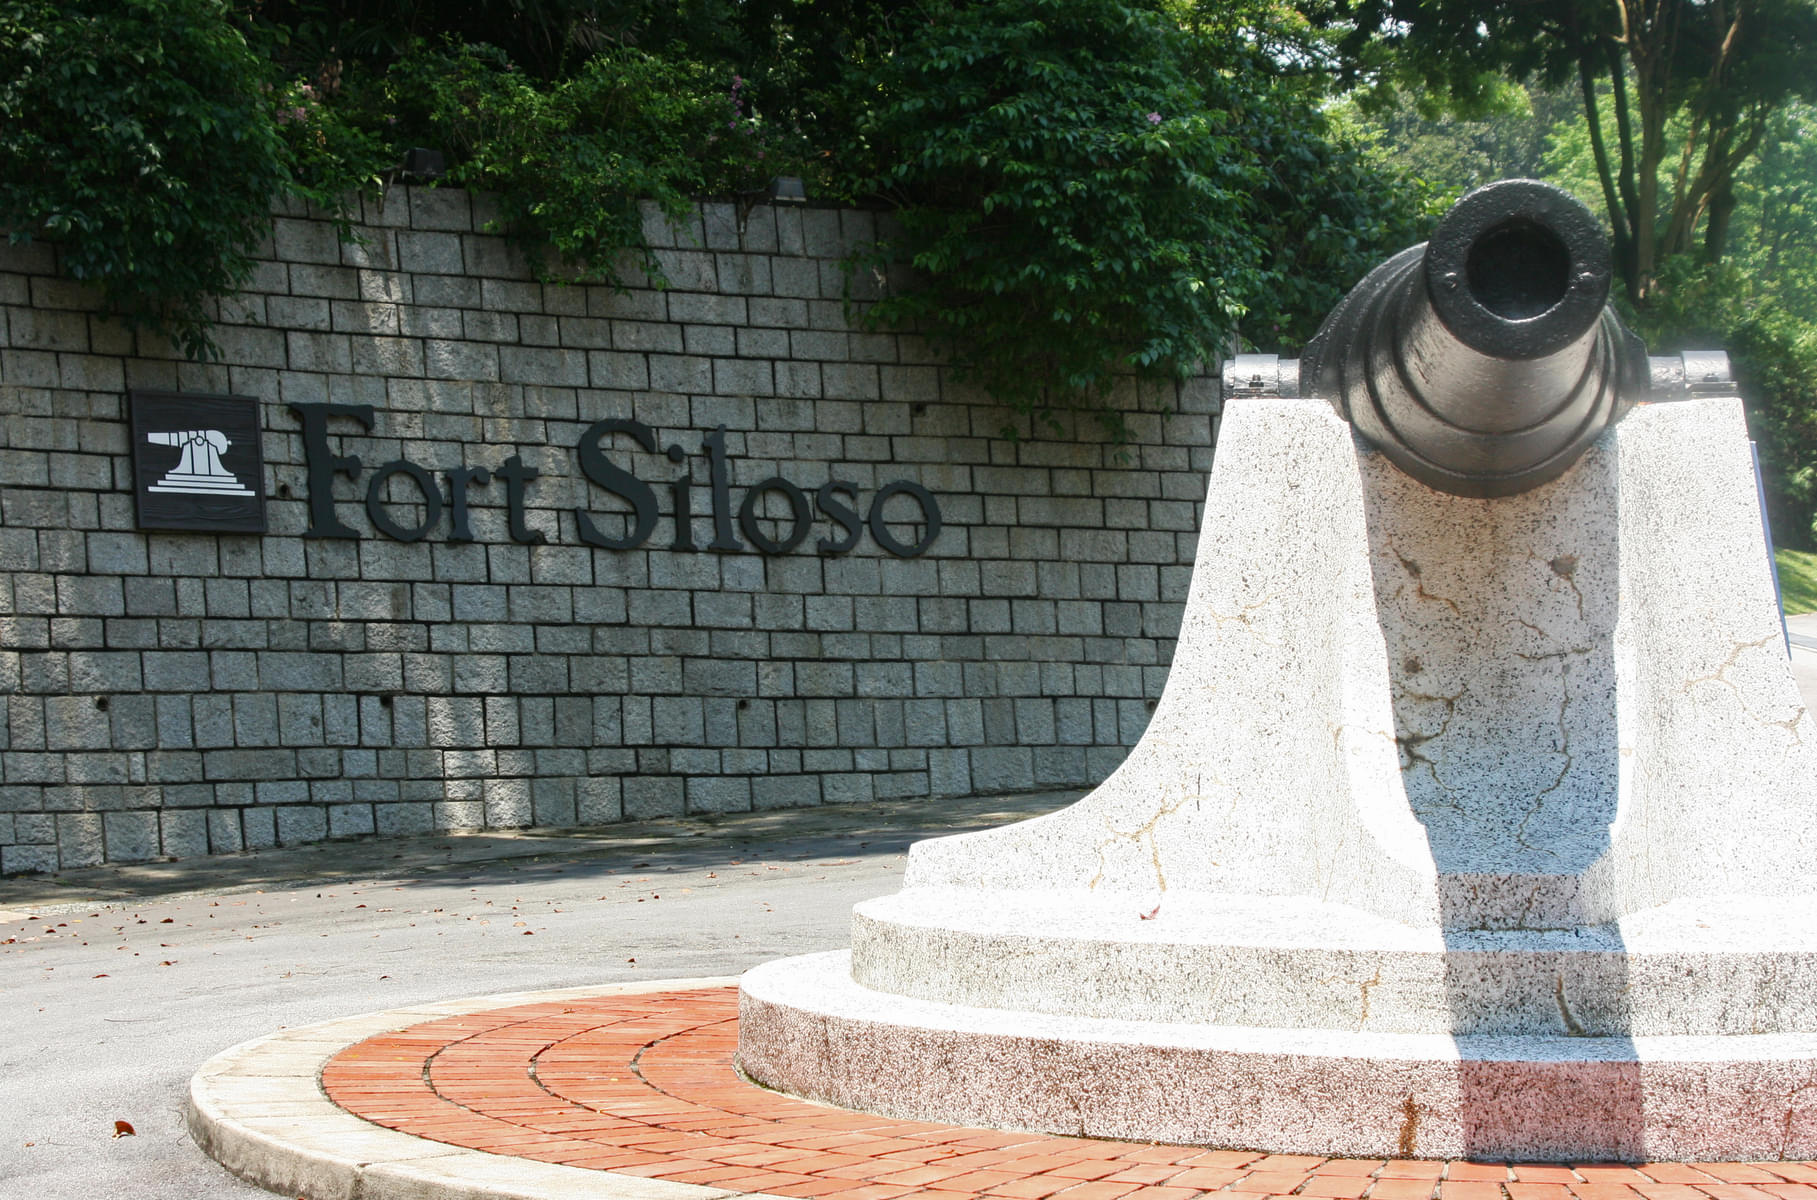 Visit Fort Siloso